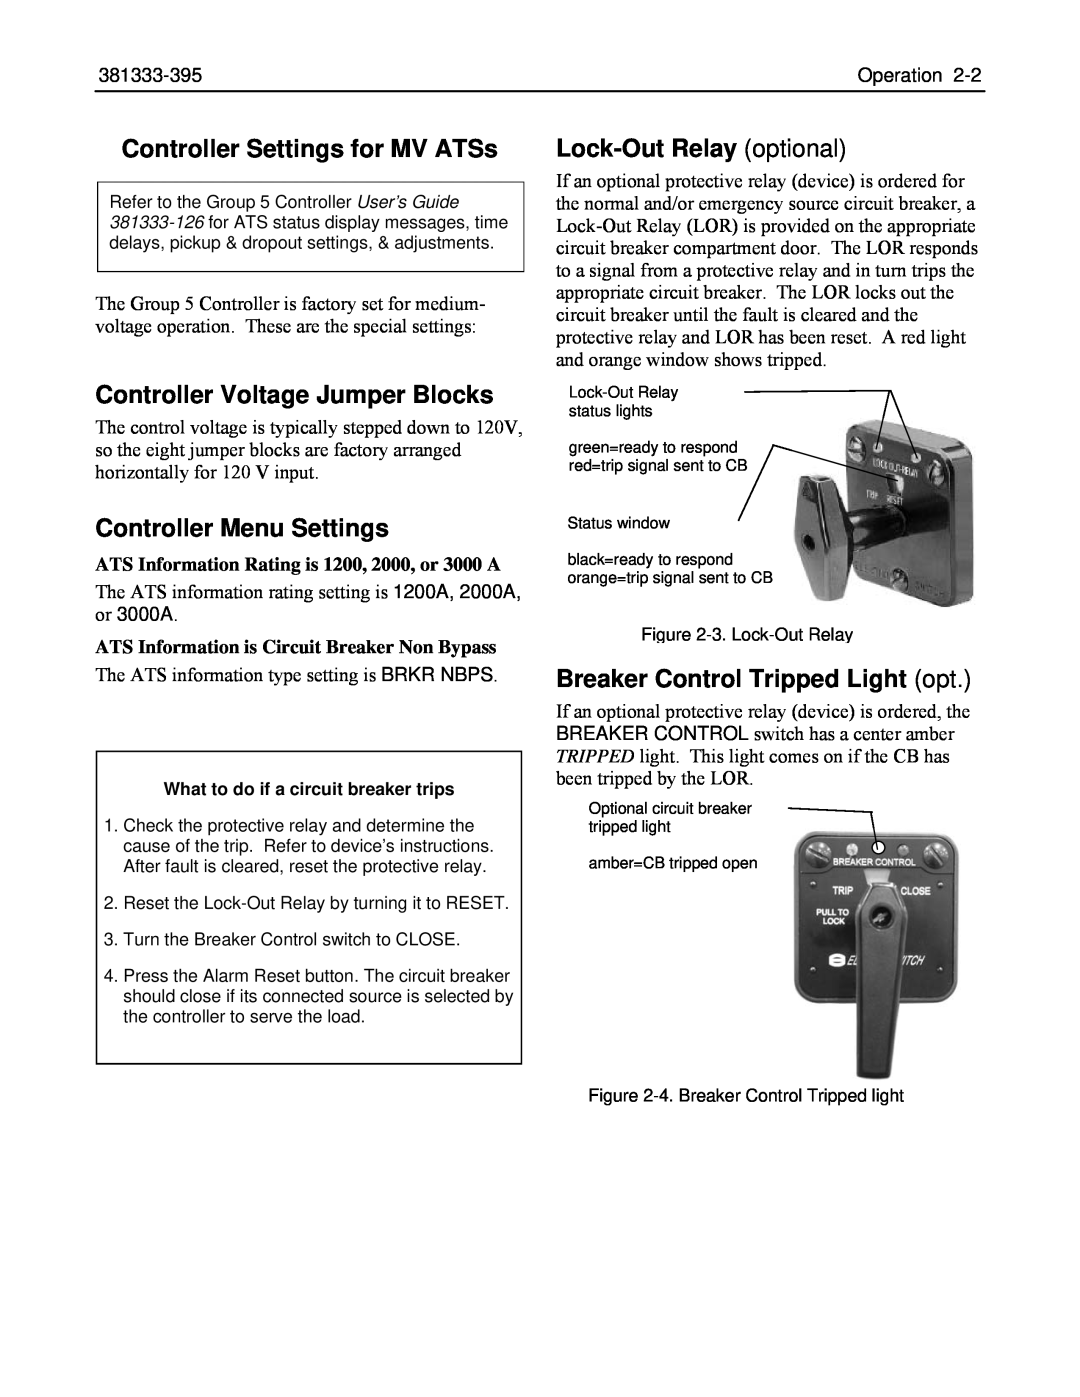 Emerson 7000 manual Controller Settings for MV ATSs, Controller Voltage Jumper Blocks, Controller Menu Settings 